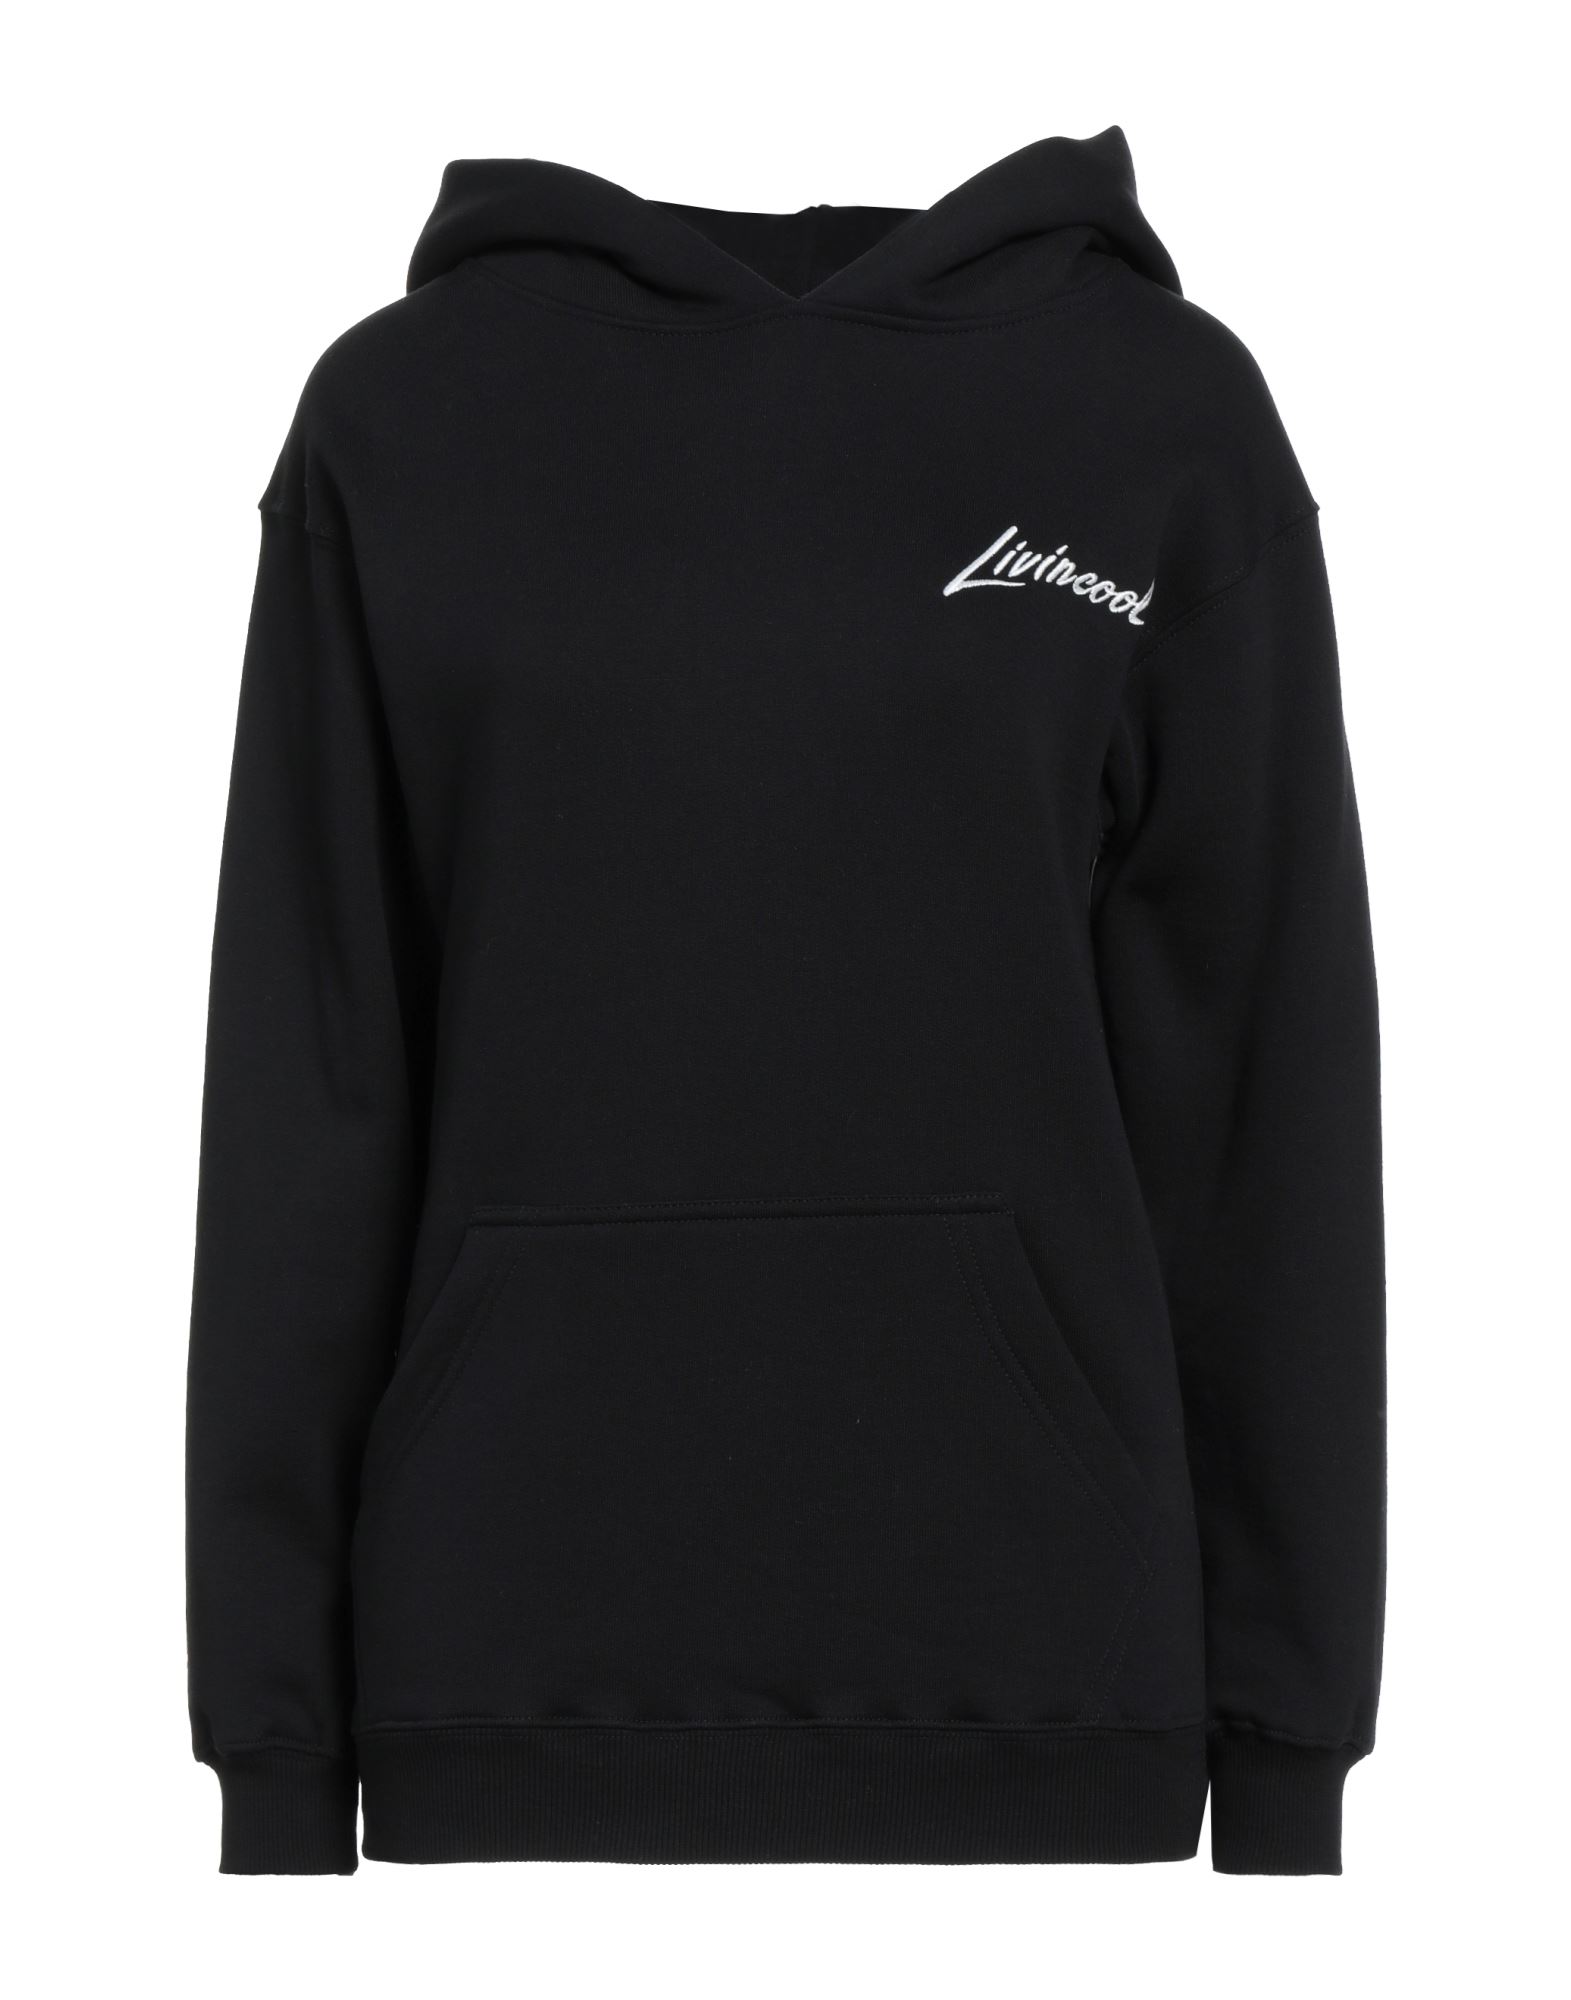 Livincool Sweatshirts In Black